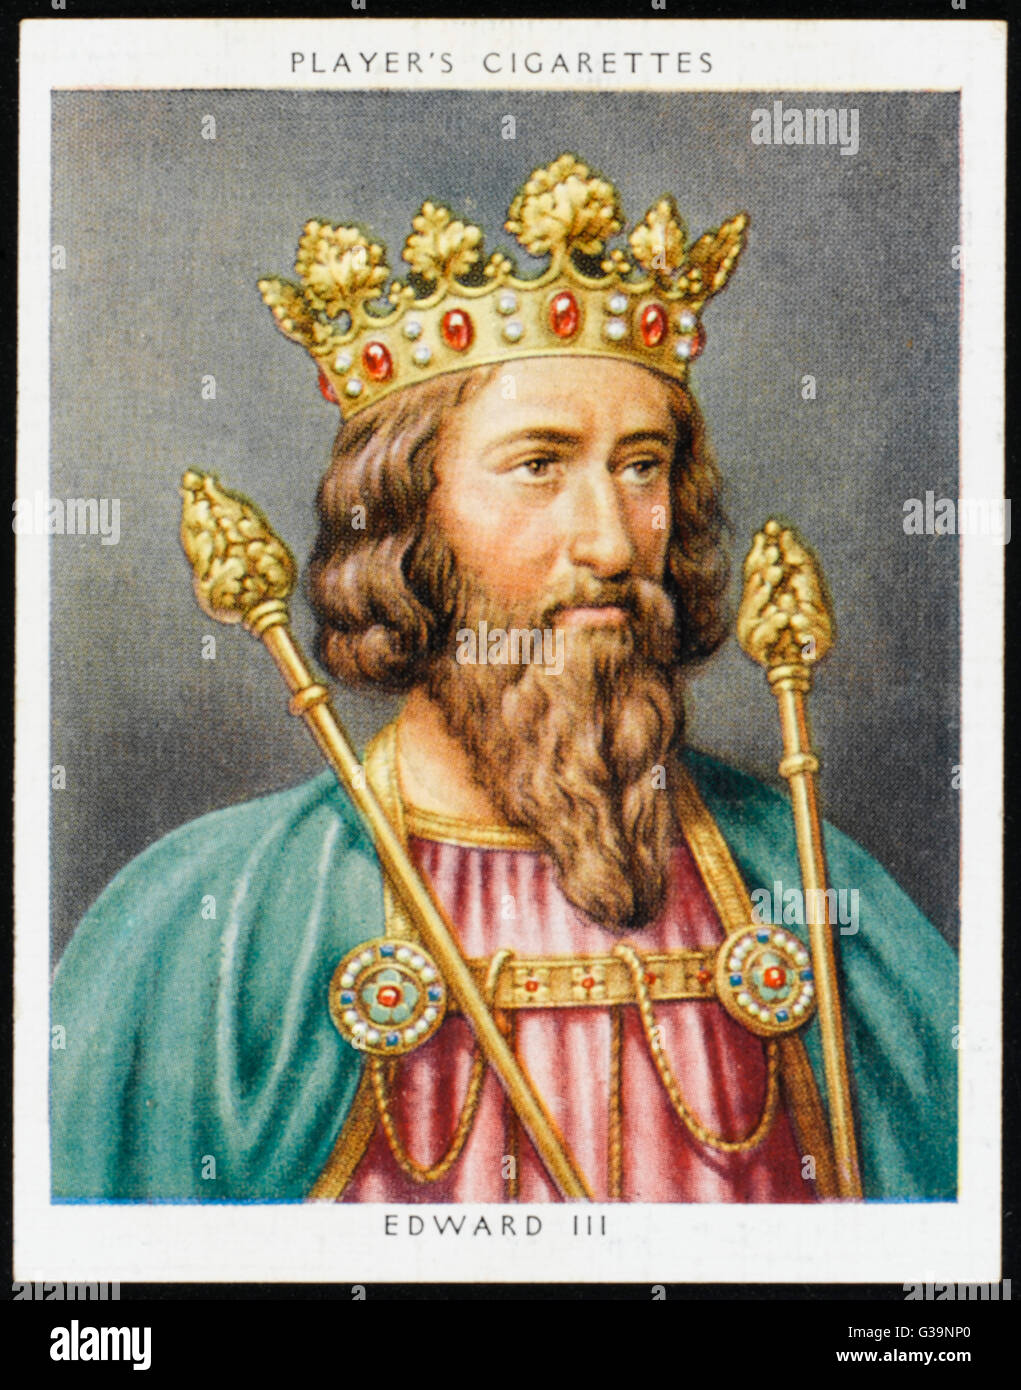 Il re Edoardo III regnava 1327 - 1377 Data: 1312 - 1377 Foto Stock